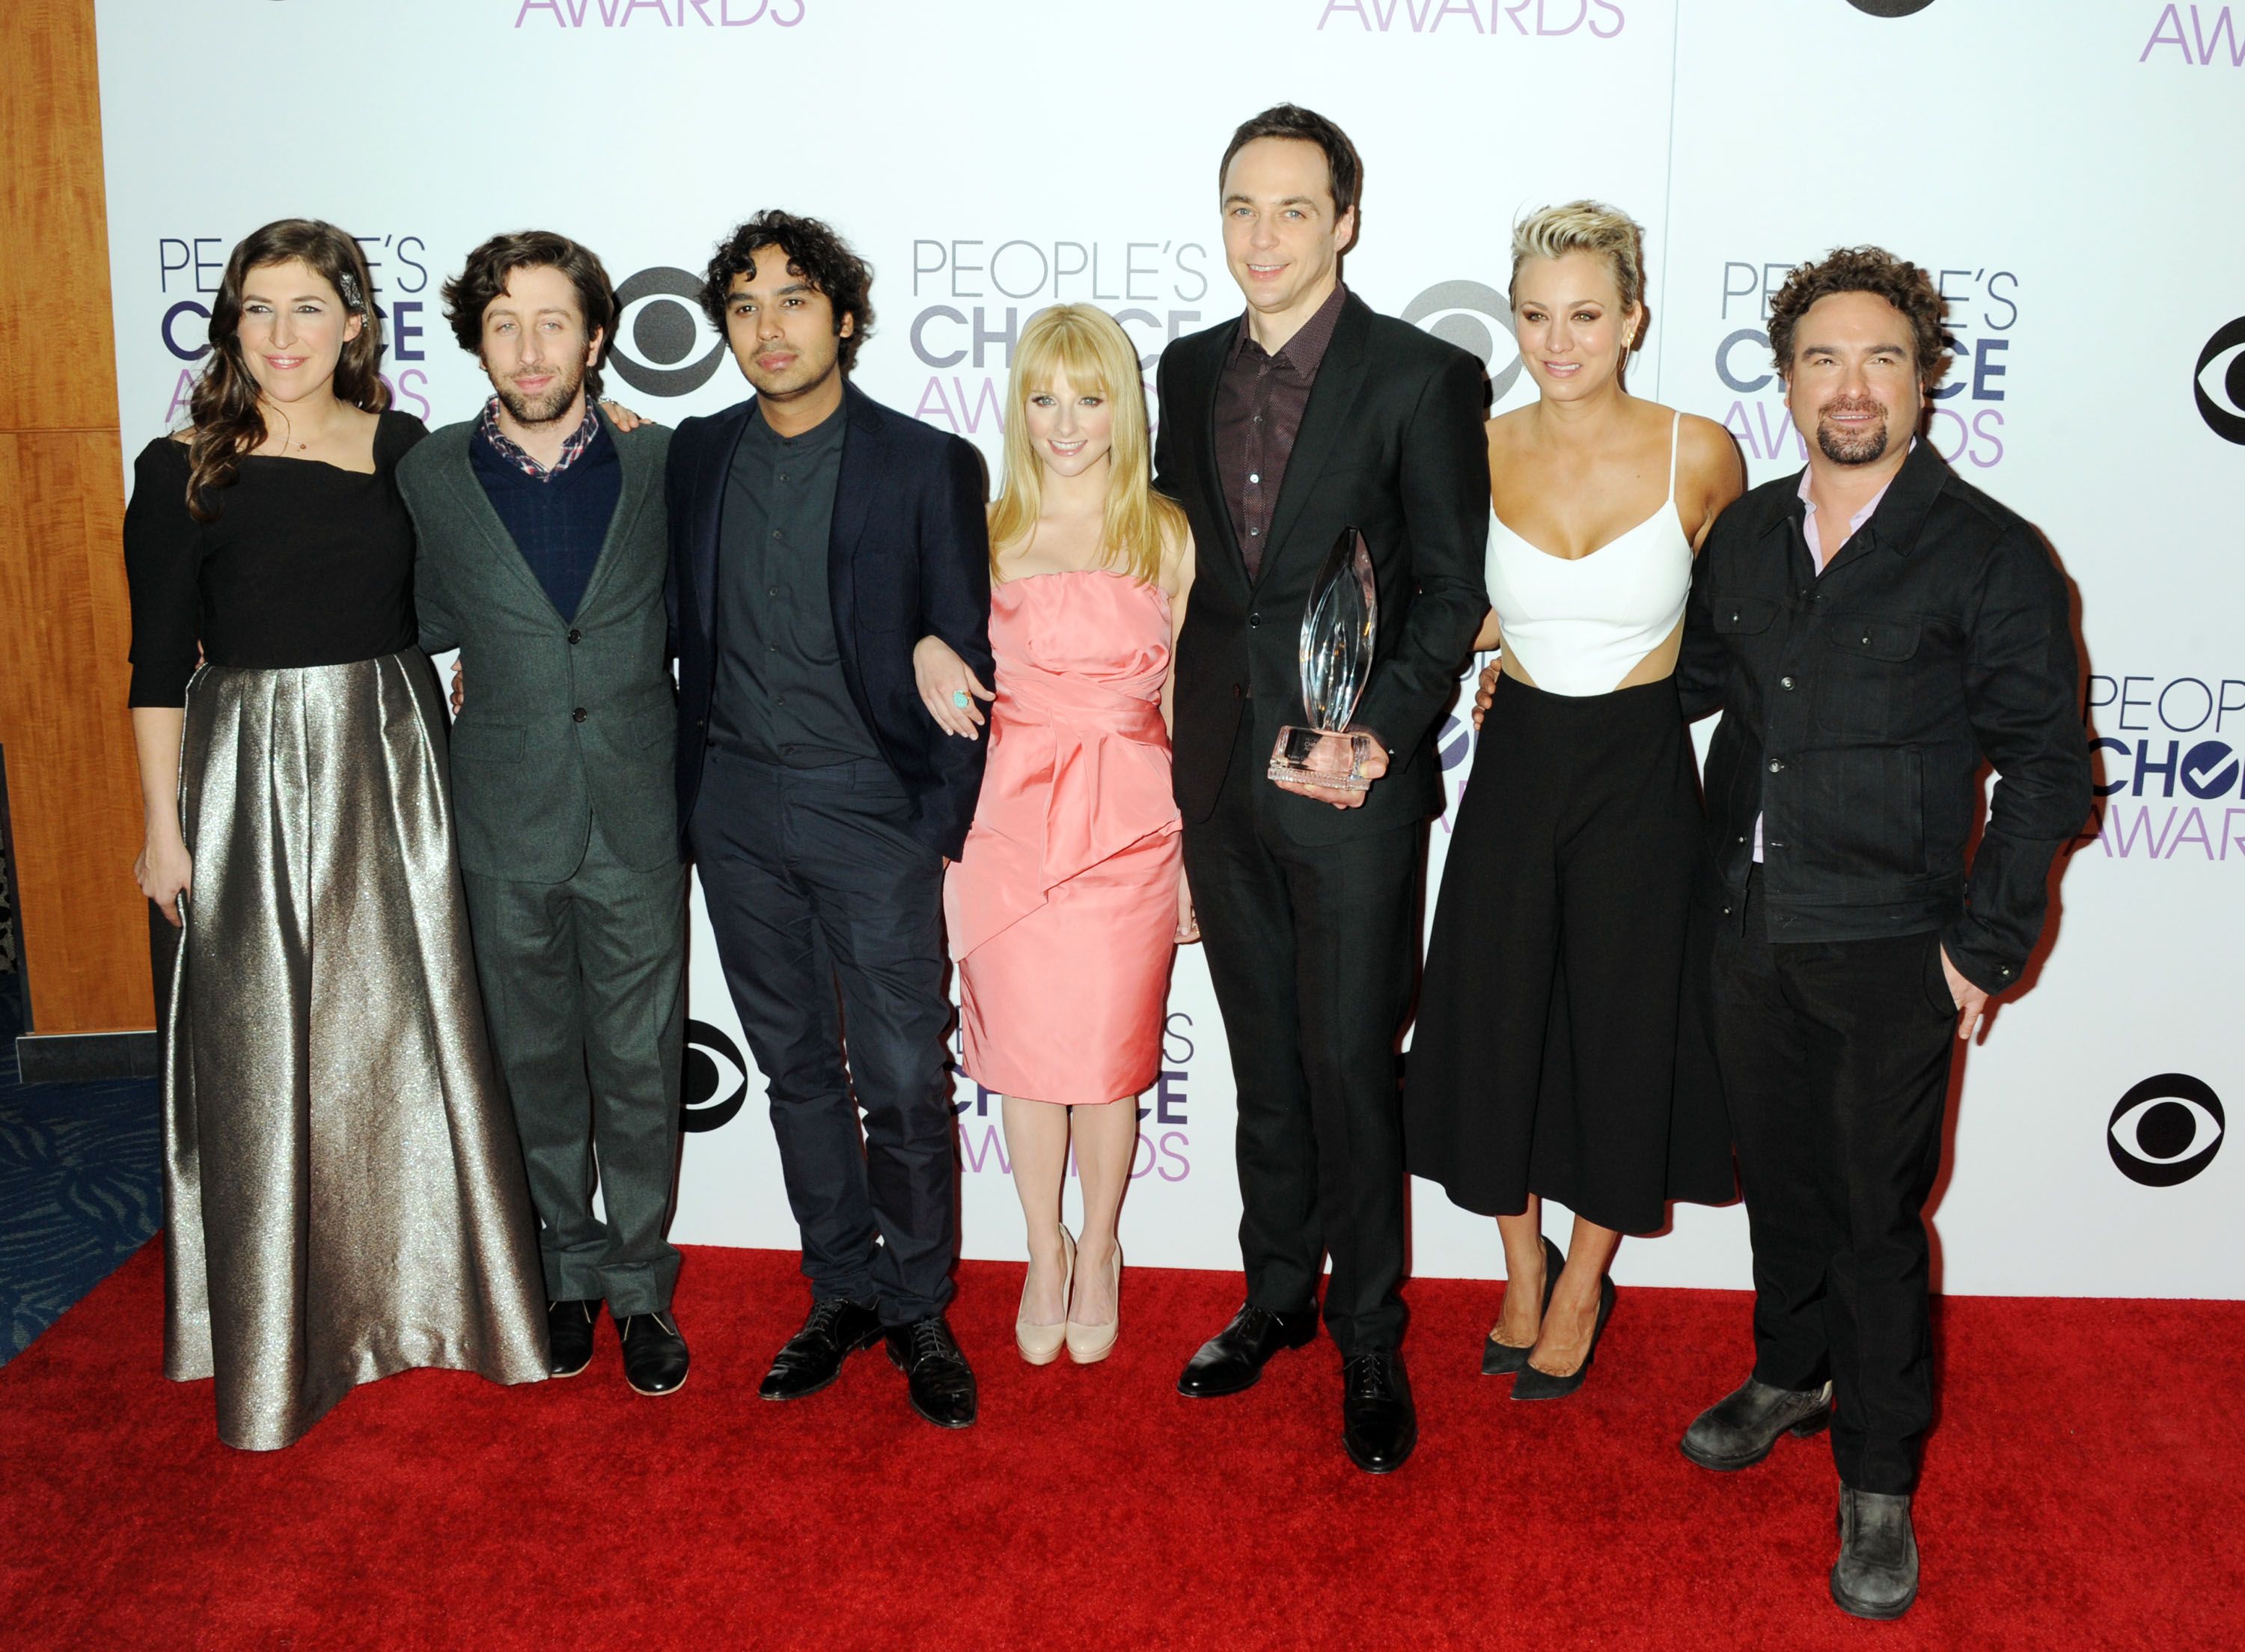 The Big Bang Theory cast at the 2015 People's Choice Awards